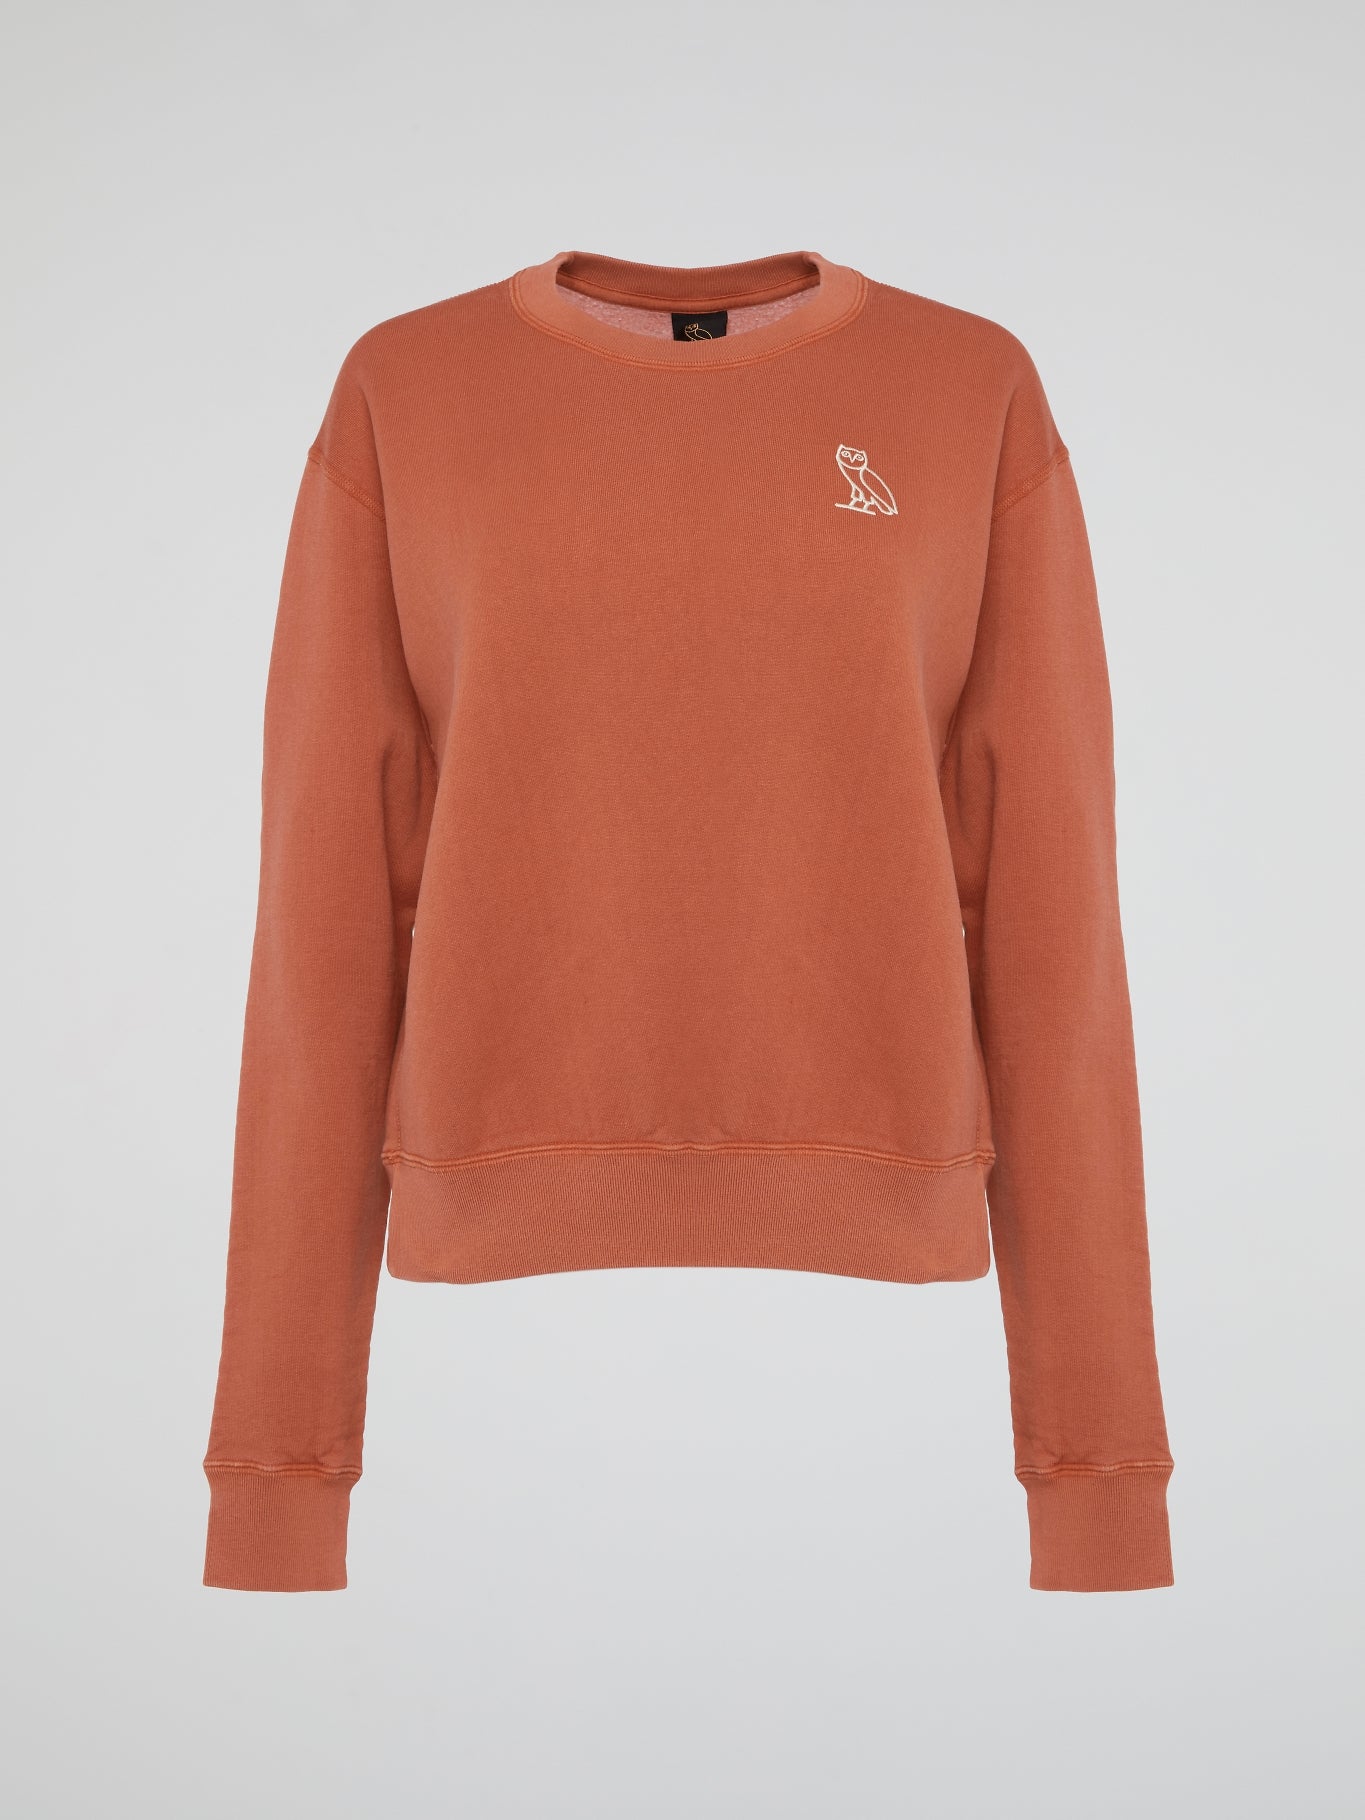 Orange Garment Dye Crop Top Crewneck Shirt – Maison-B-More Global Store